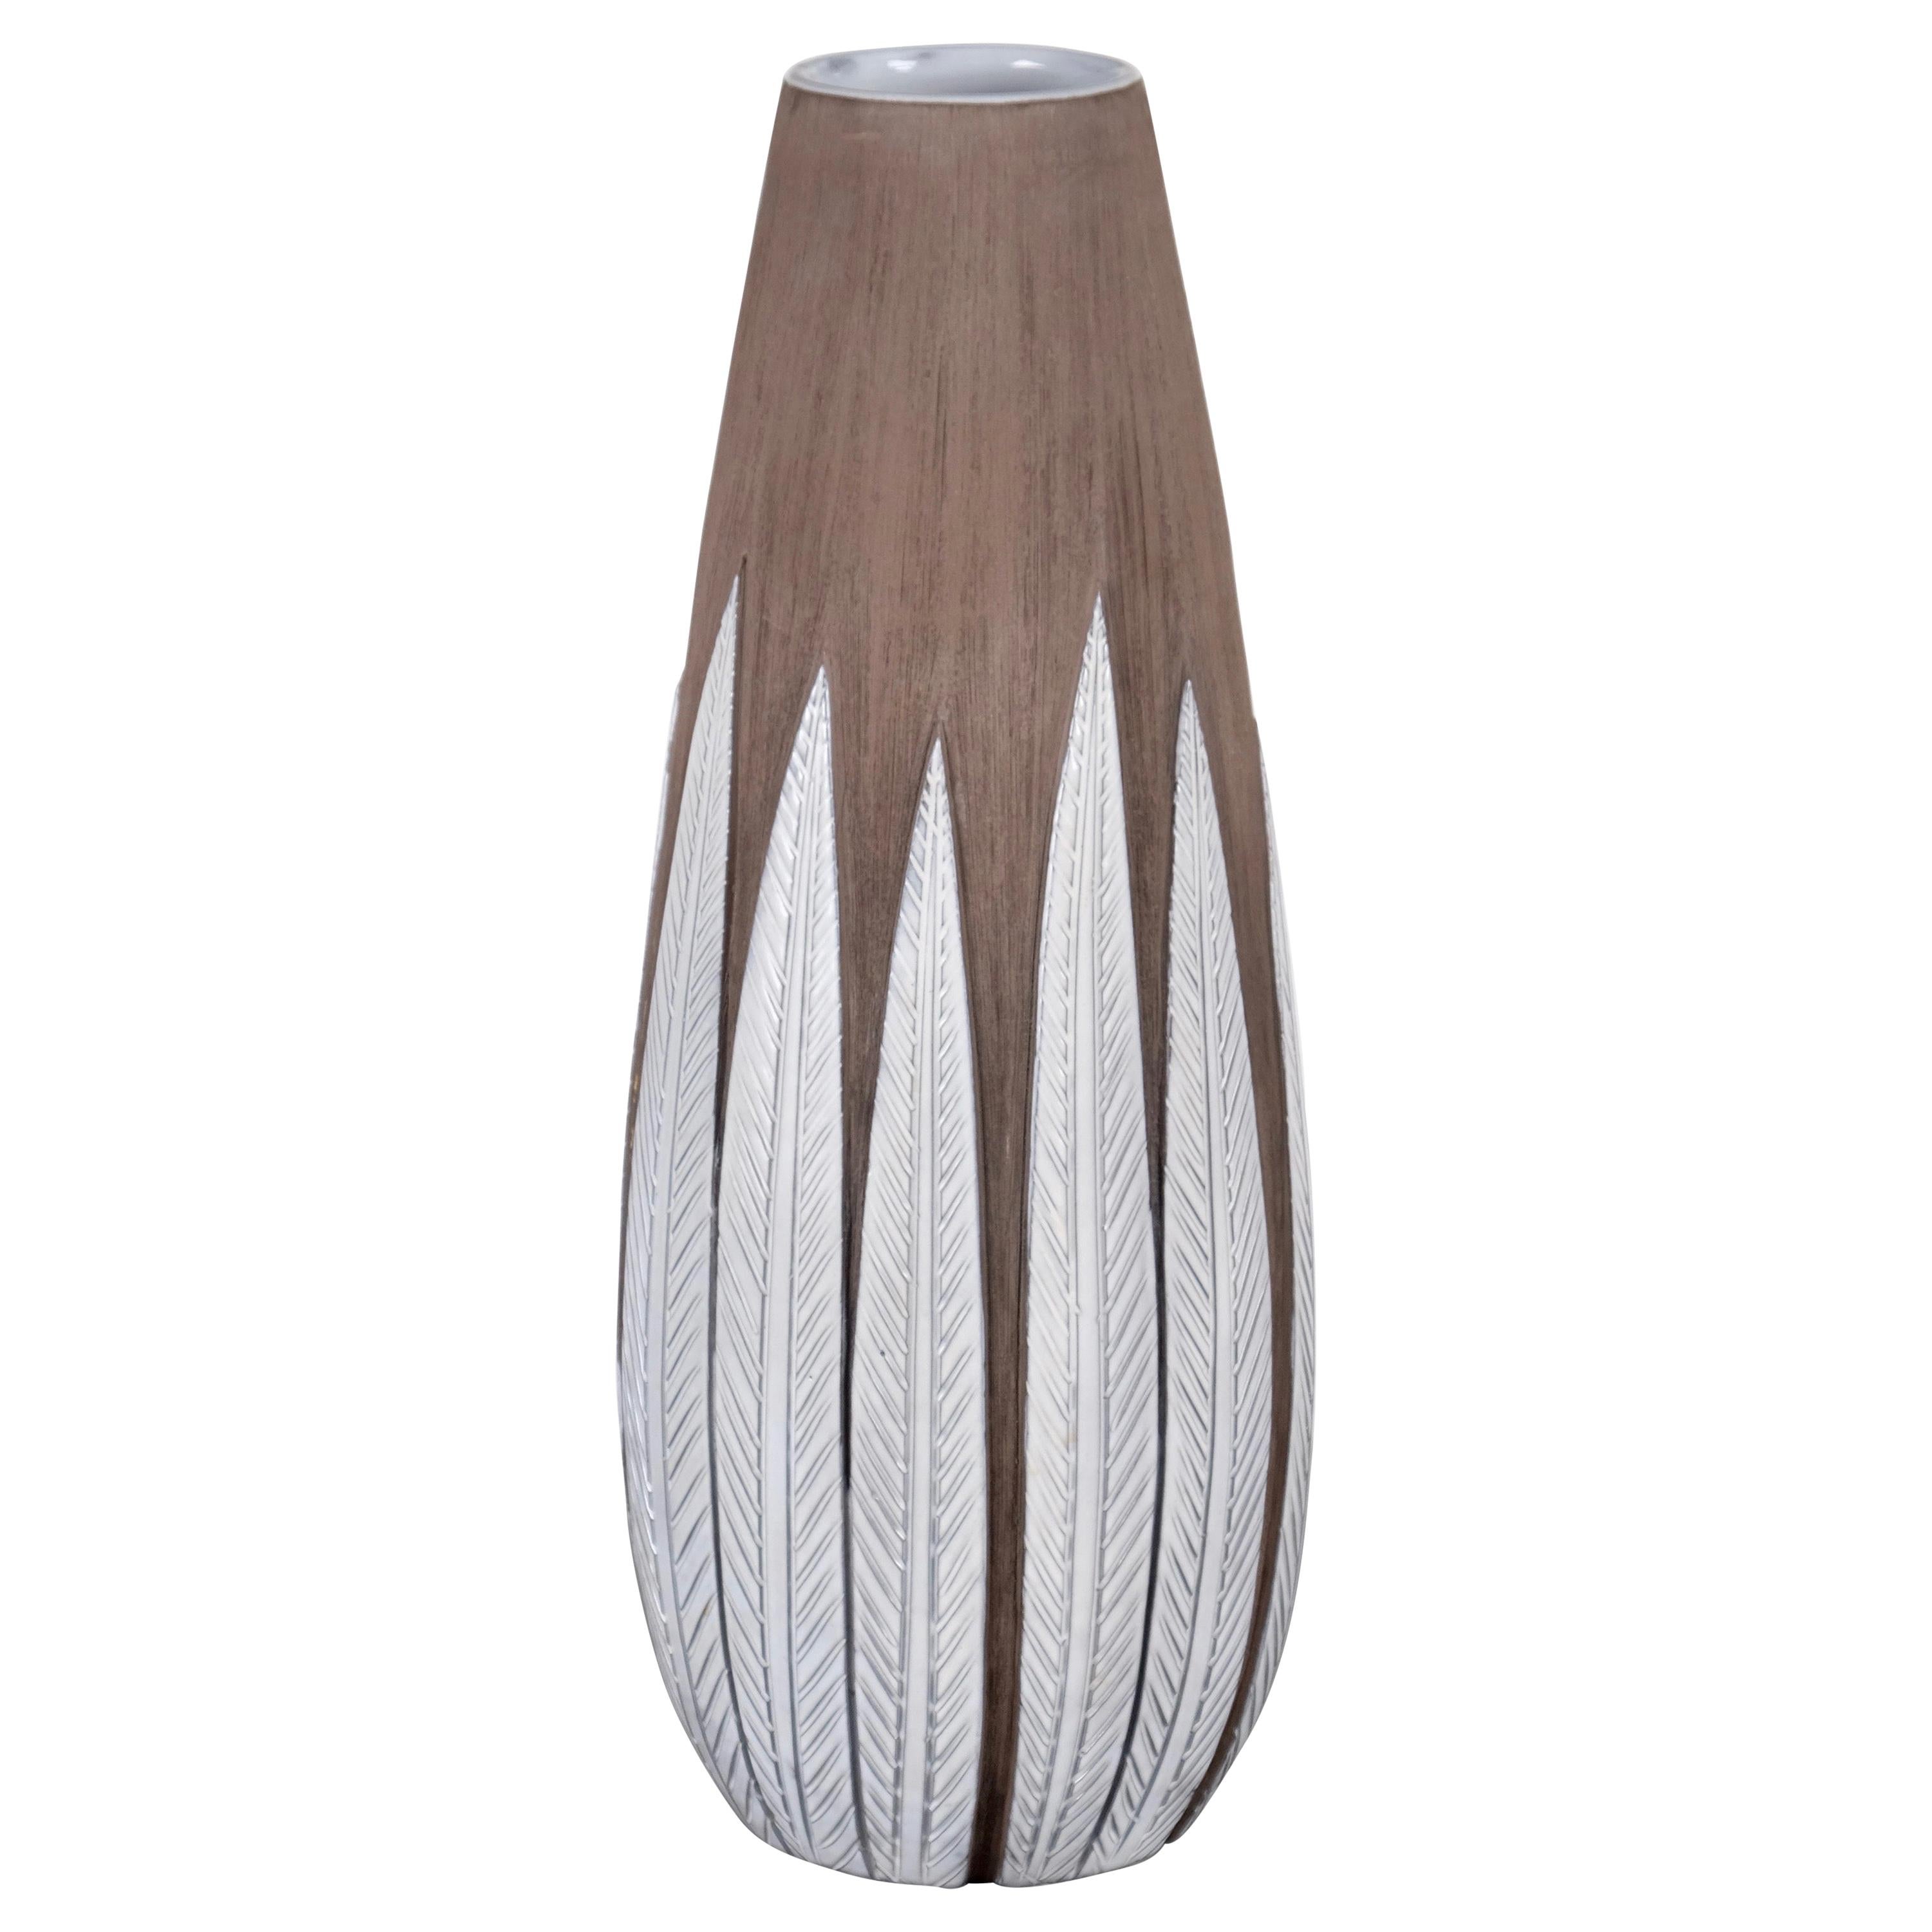 Anna-Lisa Thomson Ceramic Floor Vase Model "Paprika", 1950s